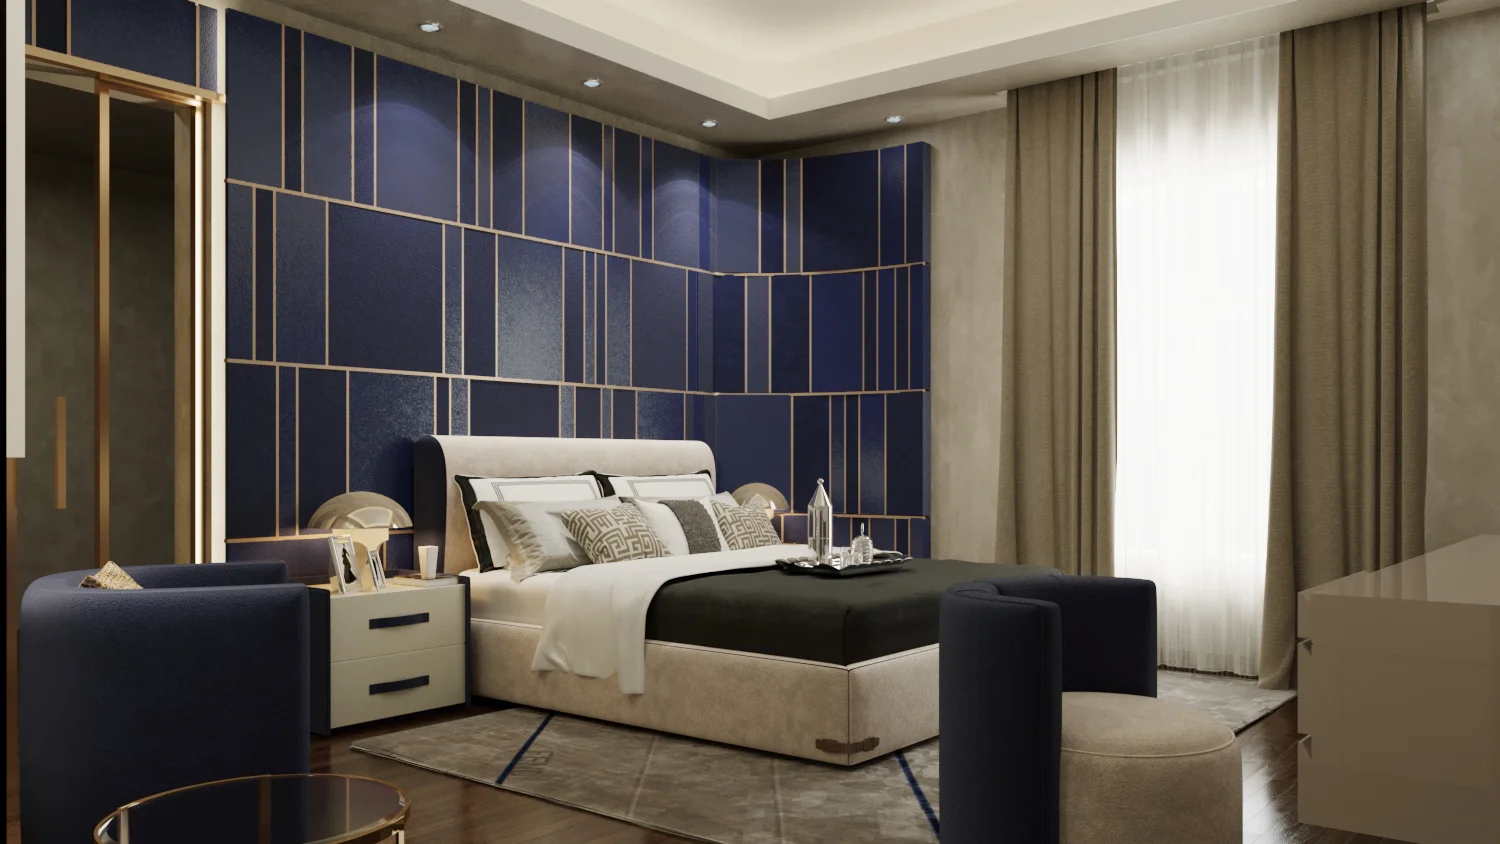 Bedroom Interior design by renderboxx studion for suite6a